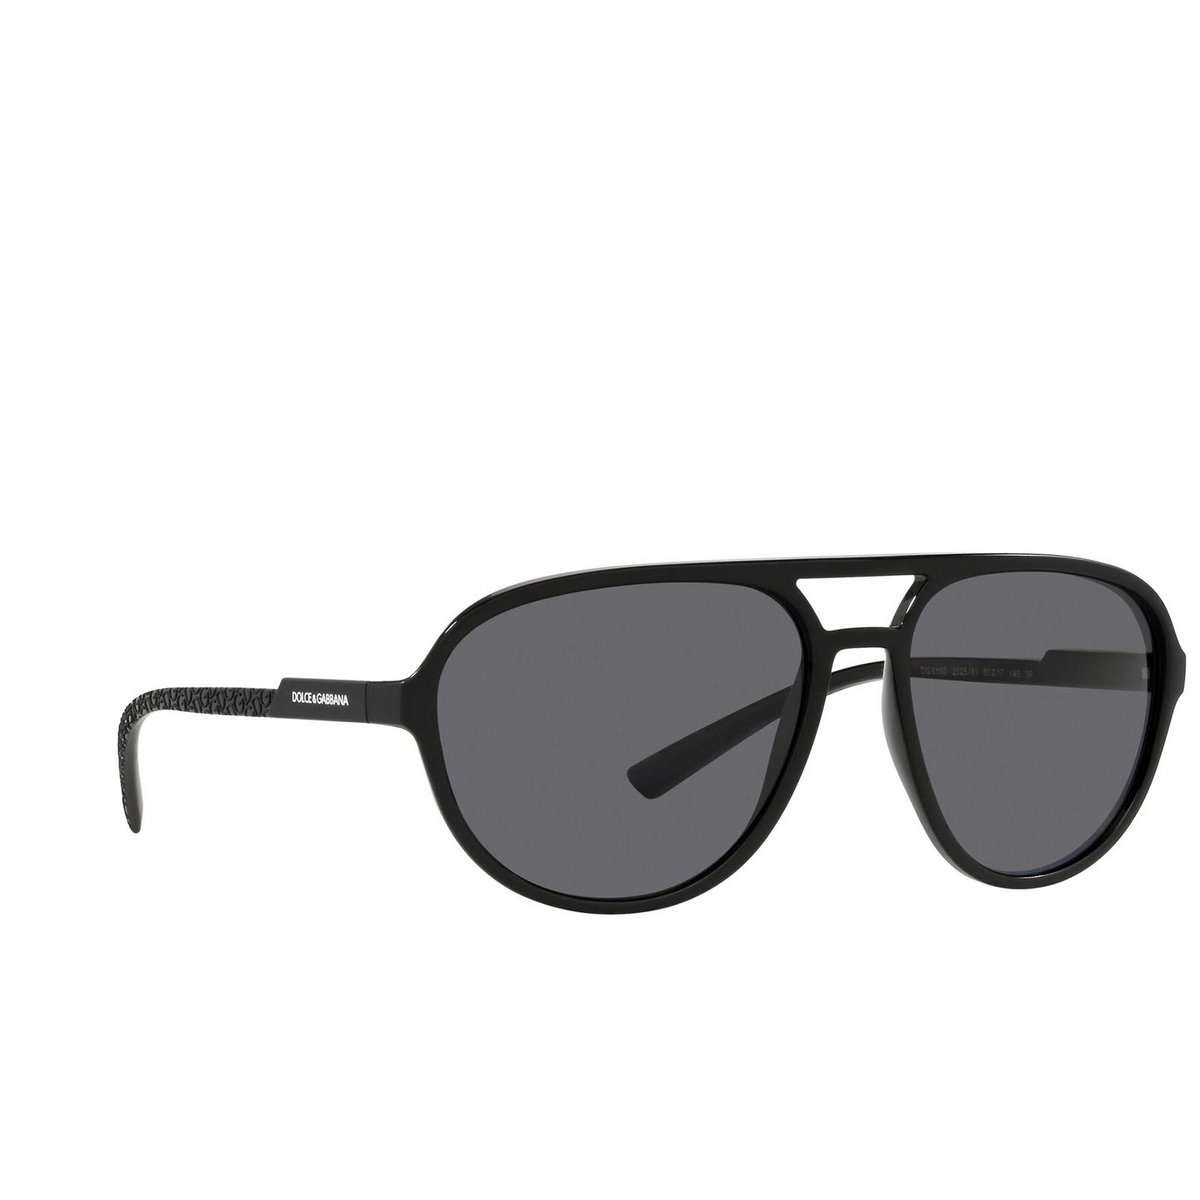 Dolce & Gabbana® Aviator Sunglasses: DG6150 color Matte Black 252581 - three-quarters view.